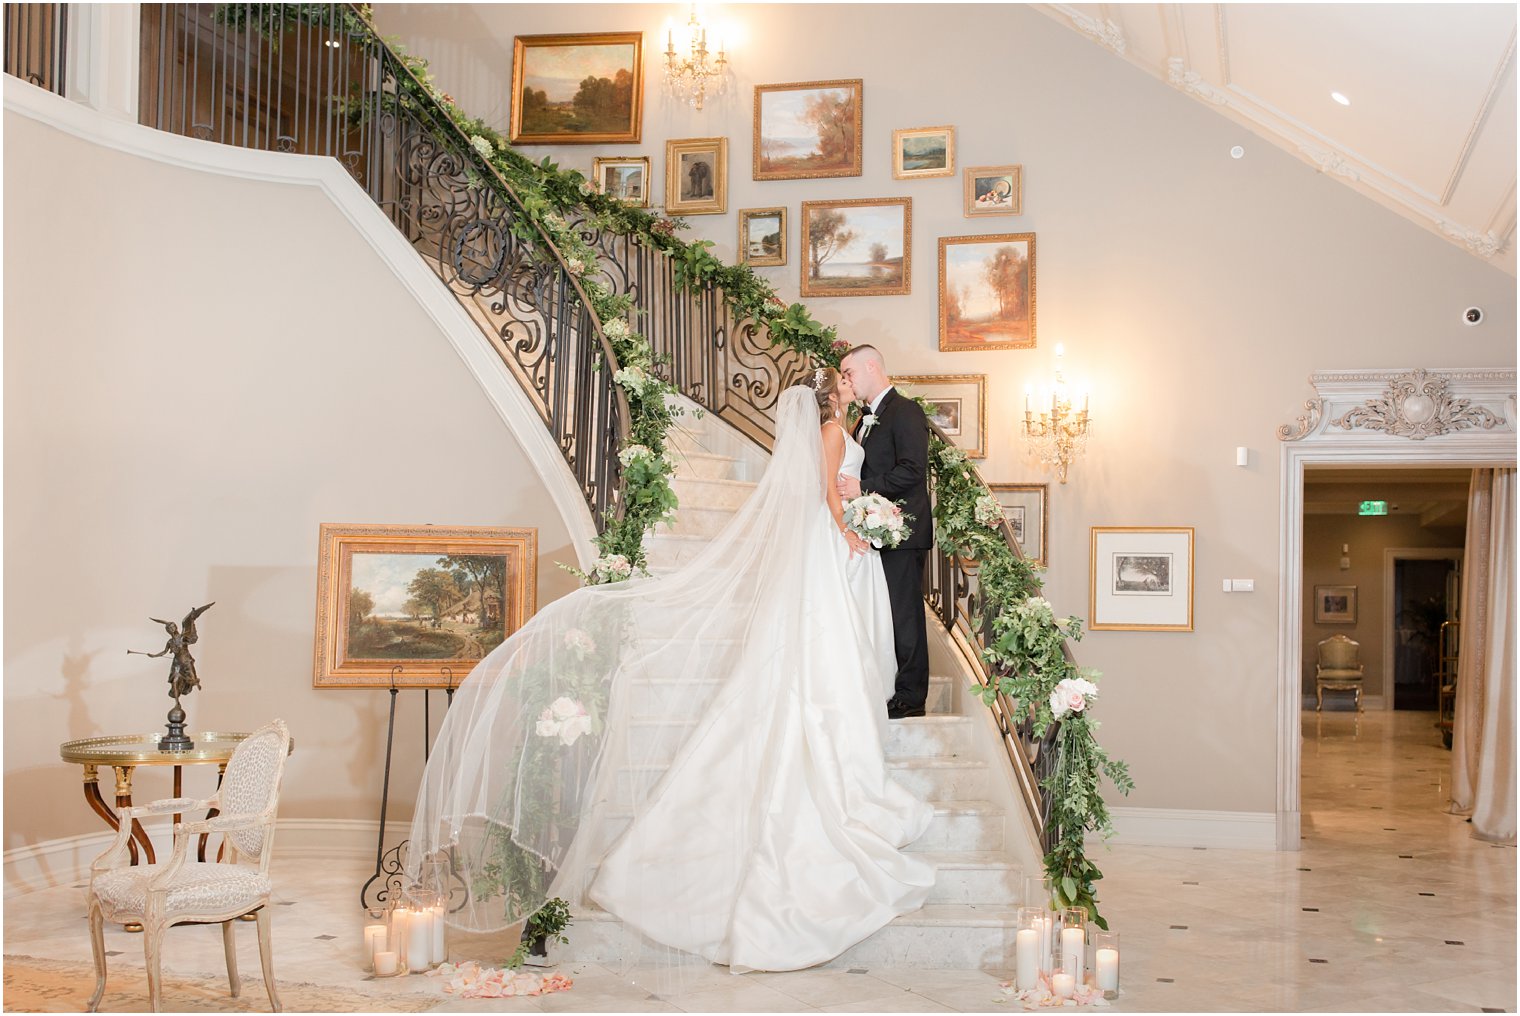 Elegant bride and groom portrait with veil toss